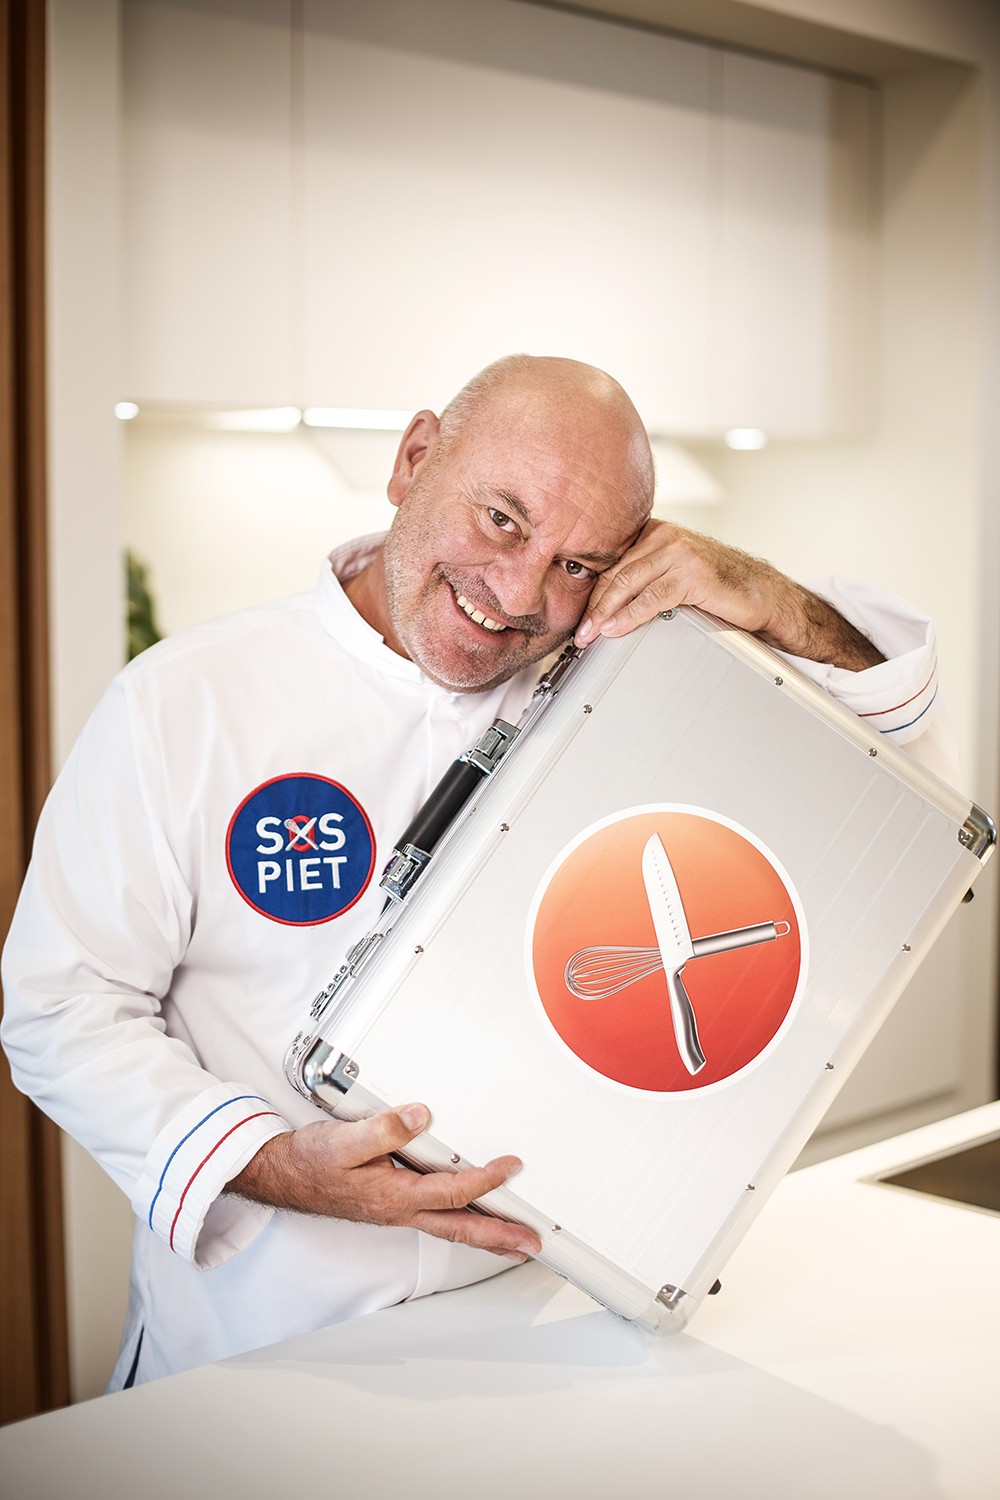 Piet Huysentruyt in 'SOS Piet'